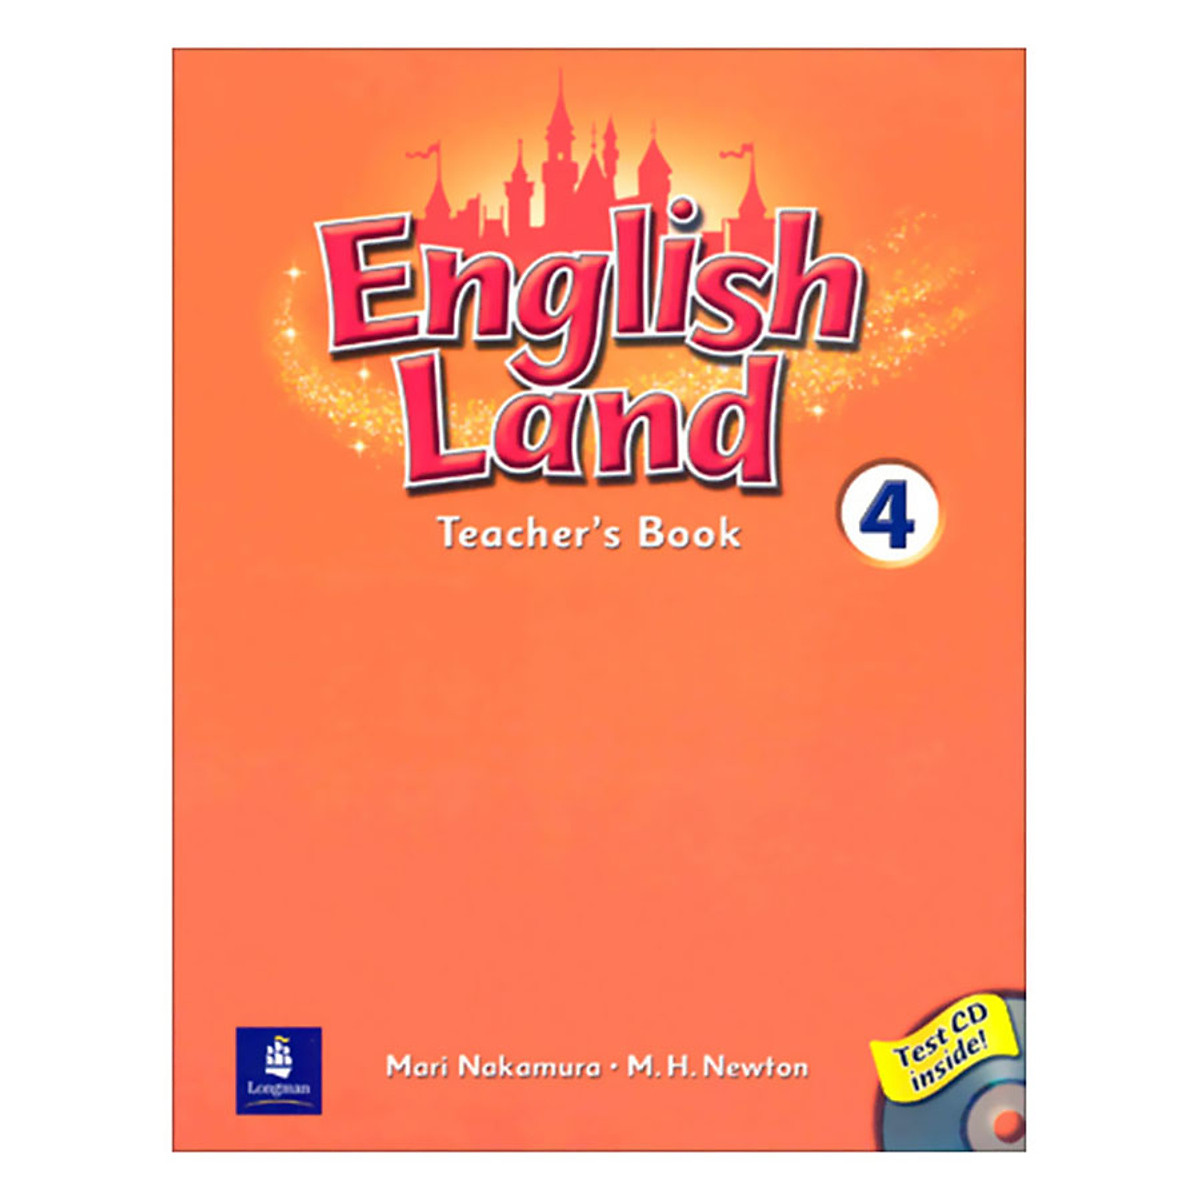 English Land 4: Teacher's Book